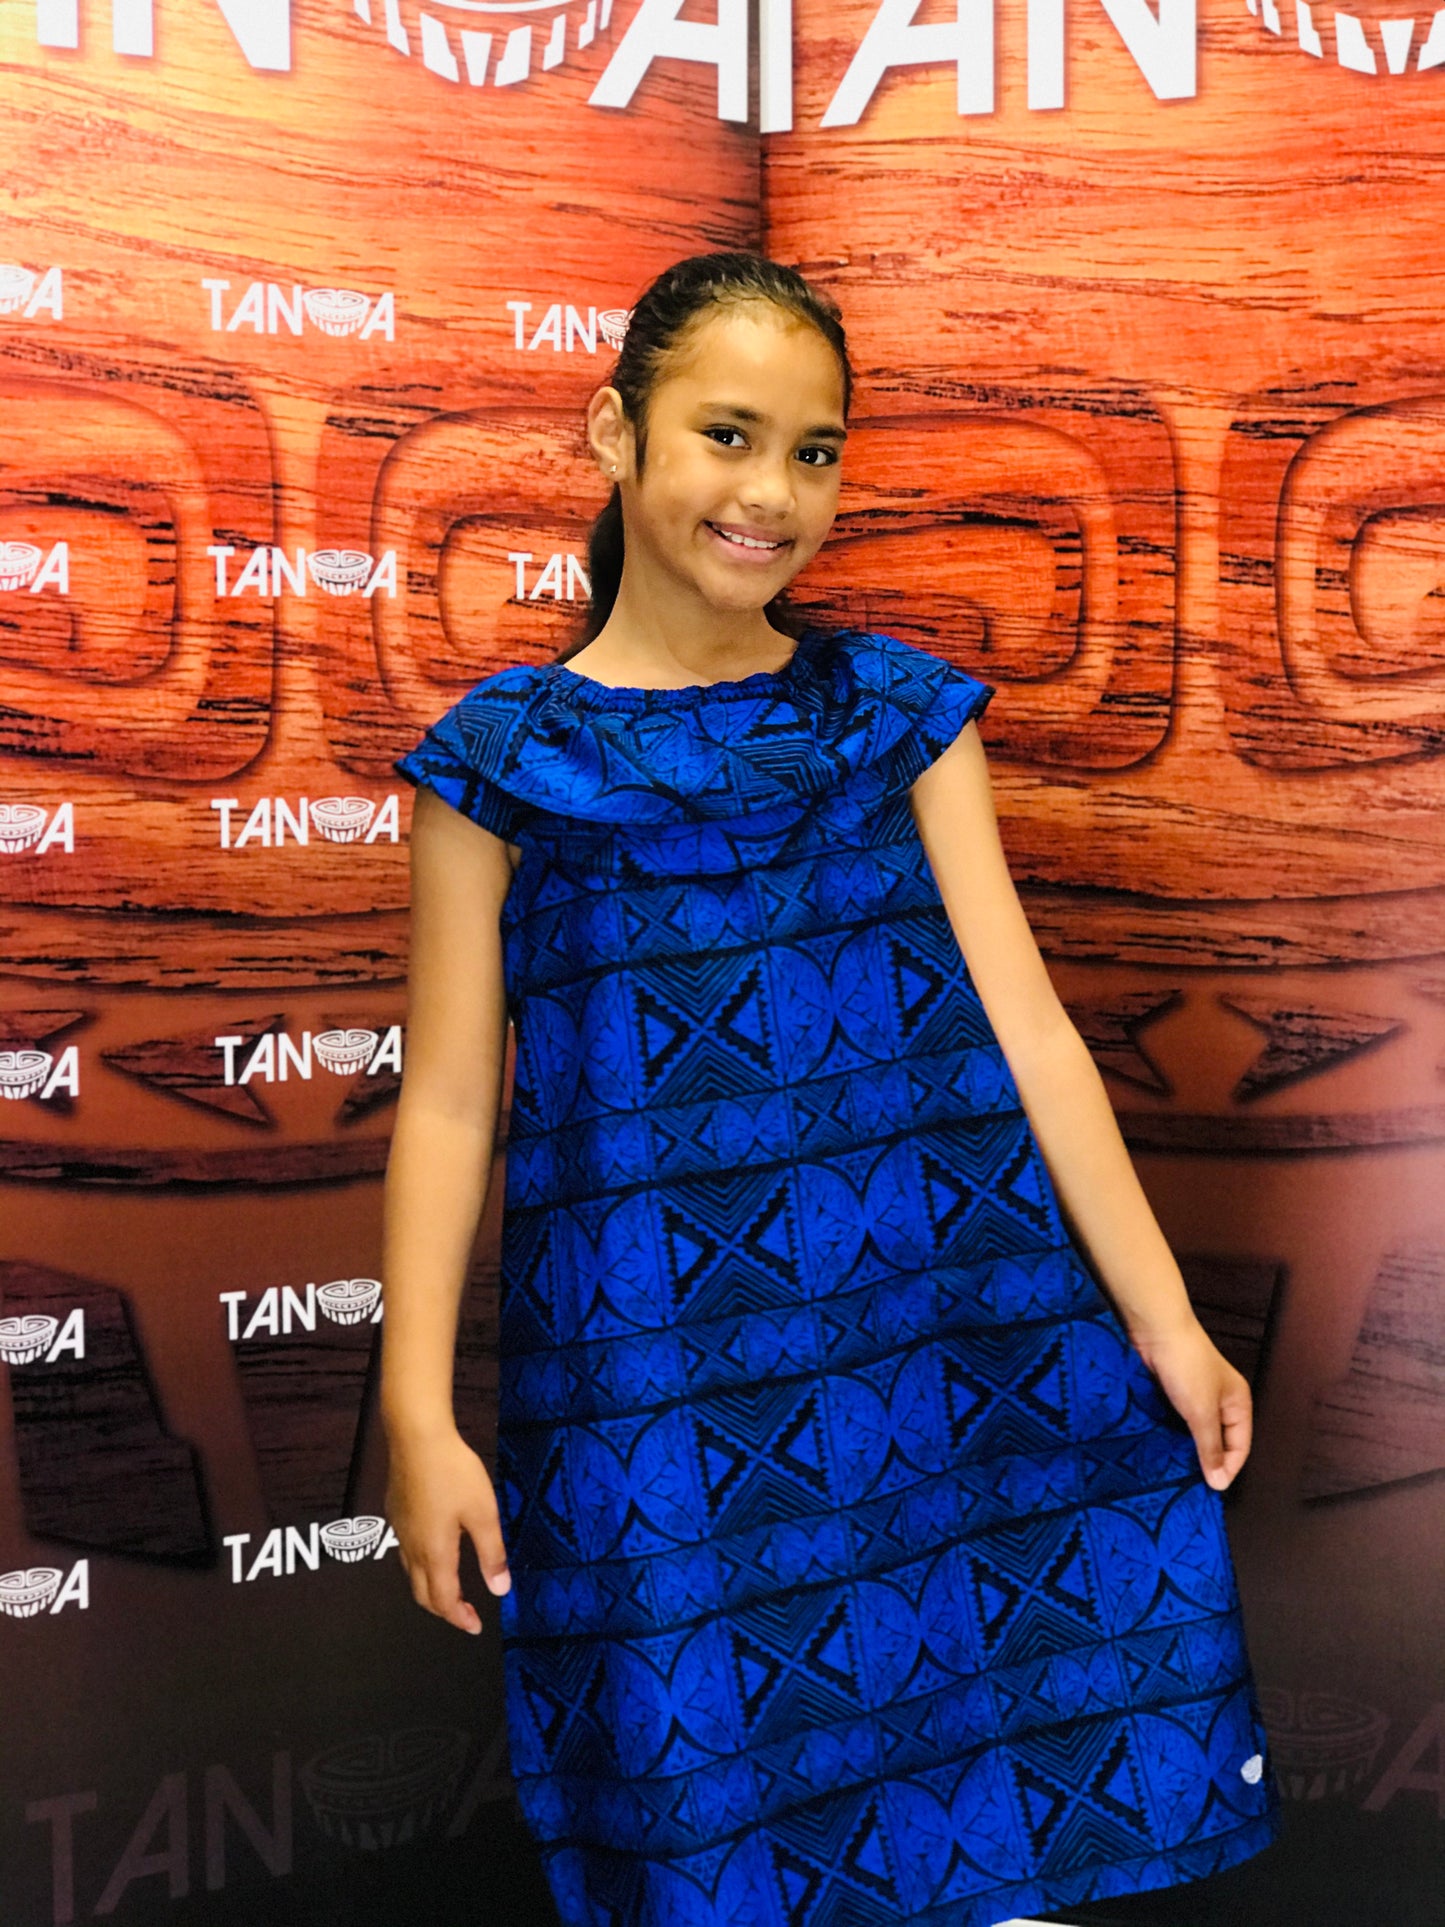 Tanoa Off Shoulder Dress - LG1024 - Royal